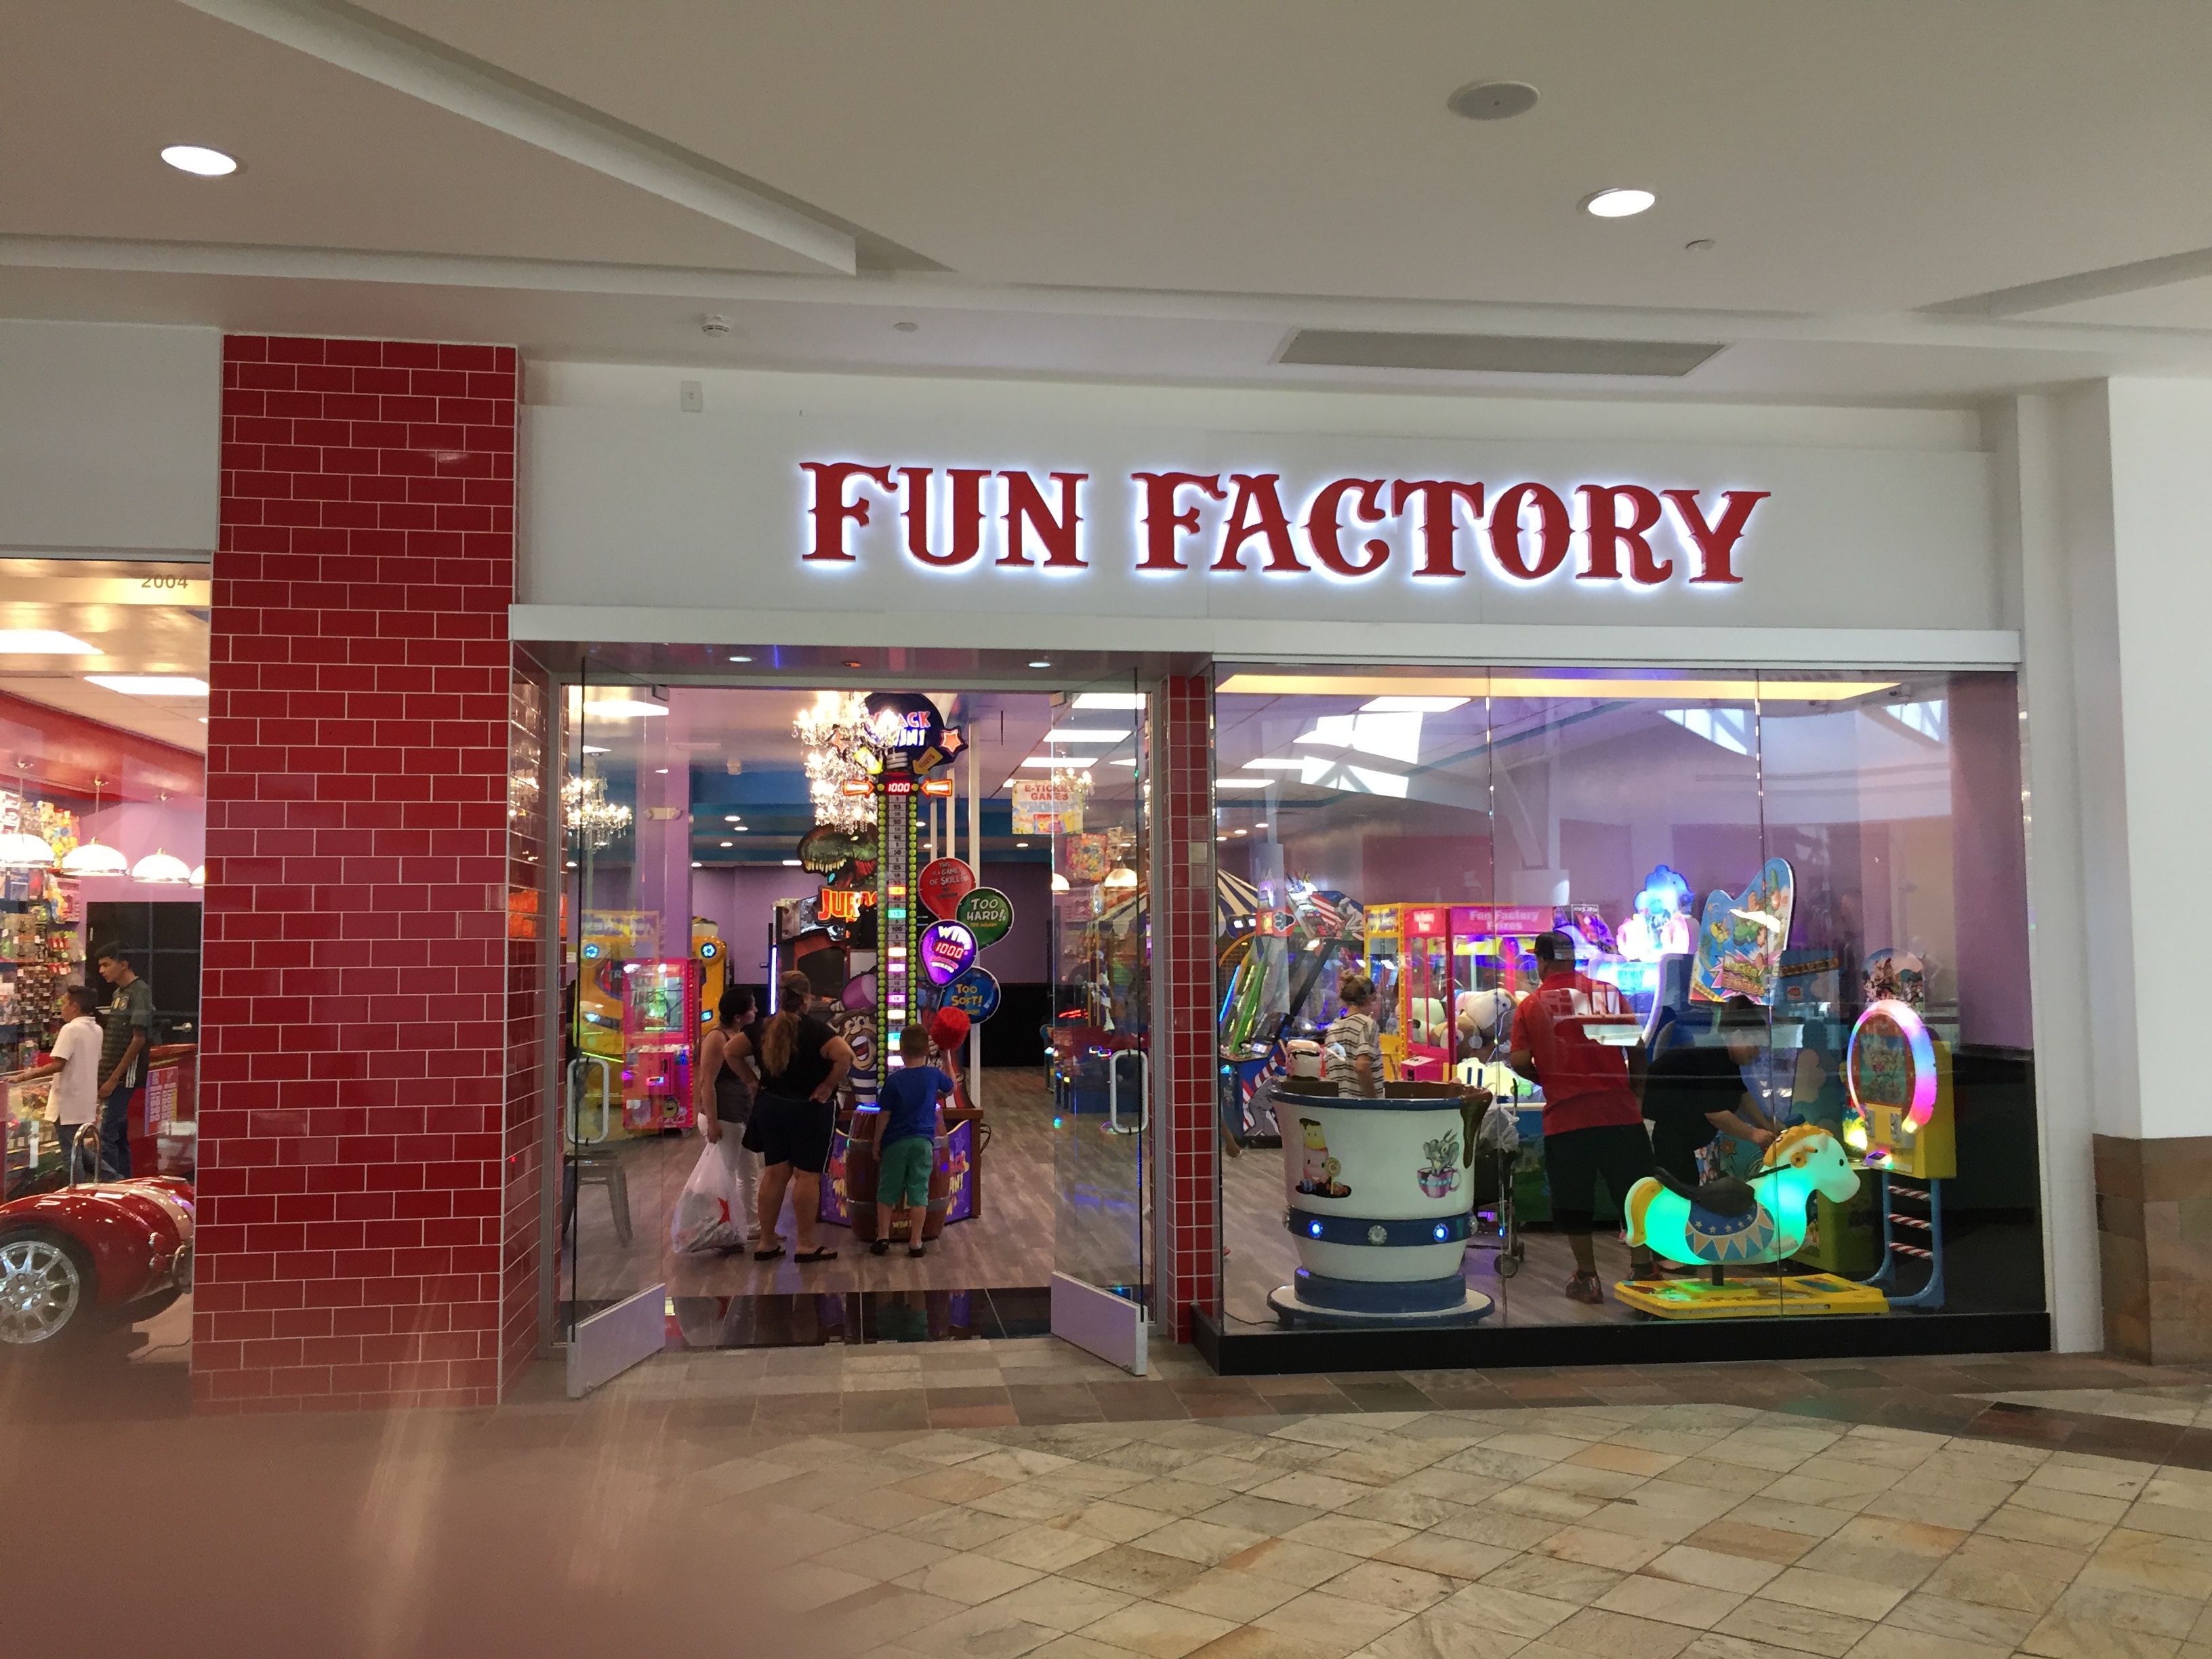 fun factory